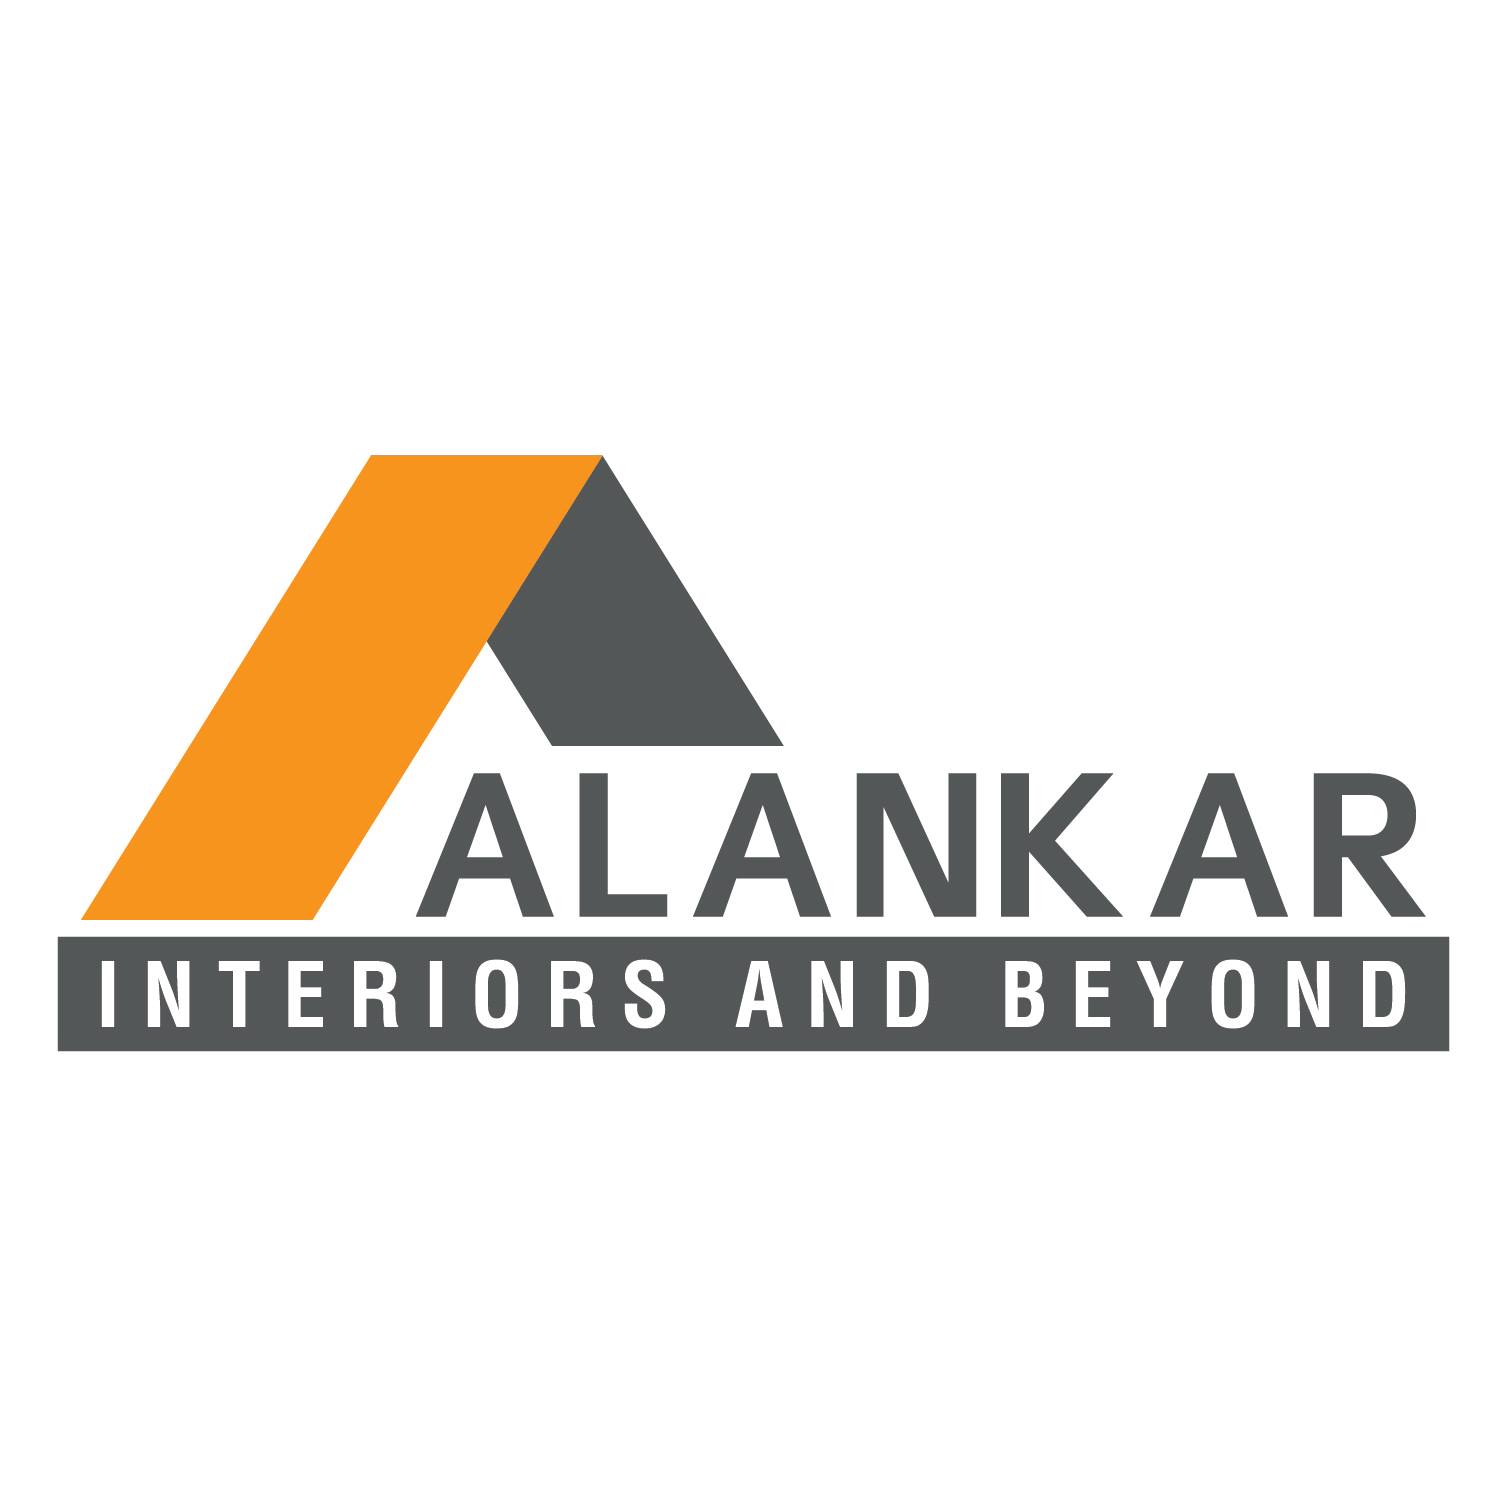 Alankar Interiors and Beyond